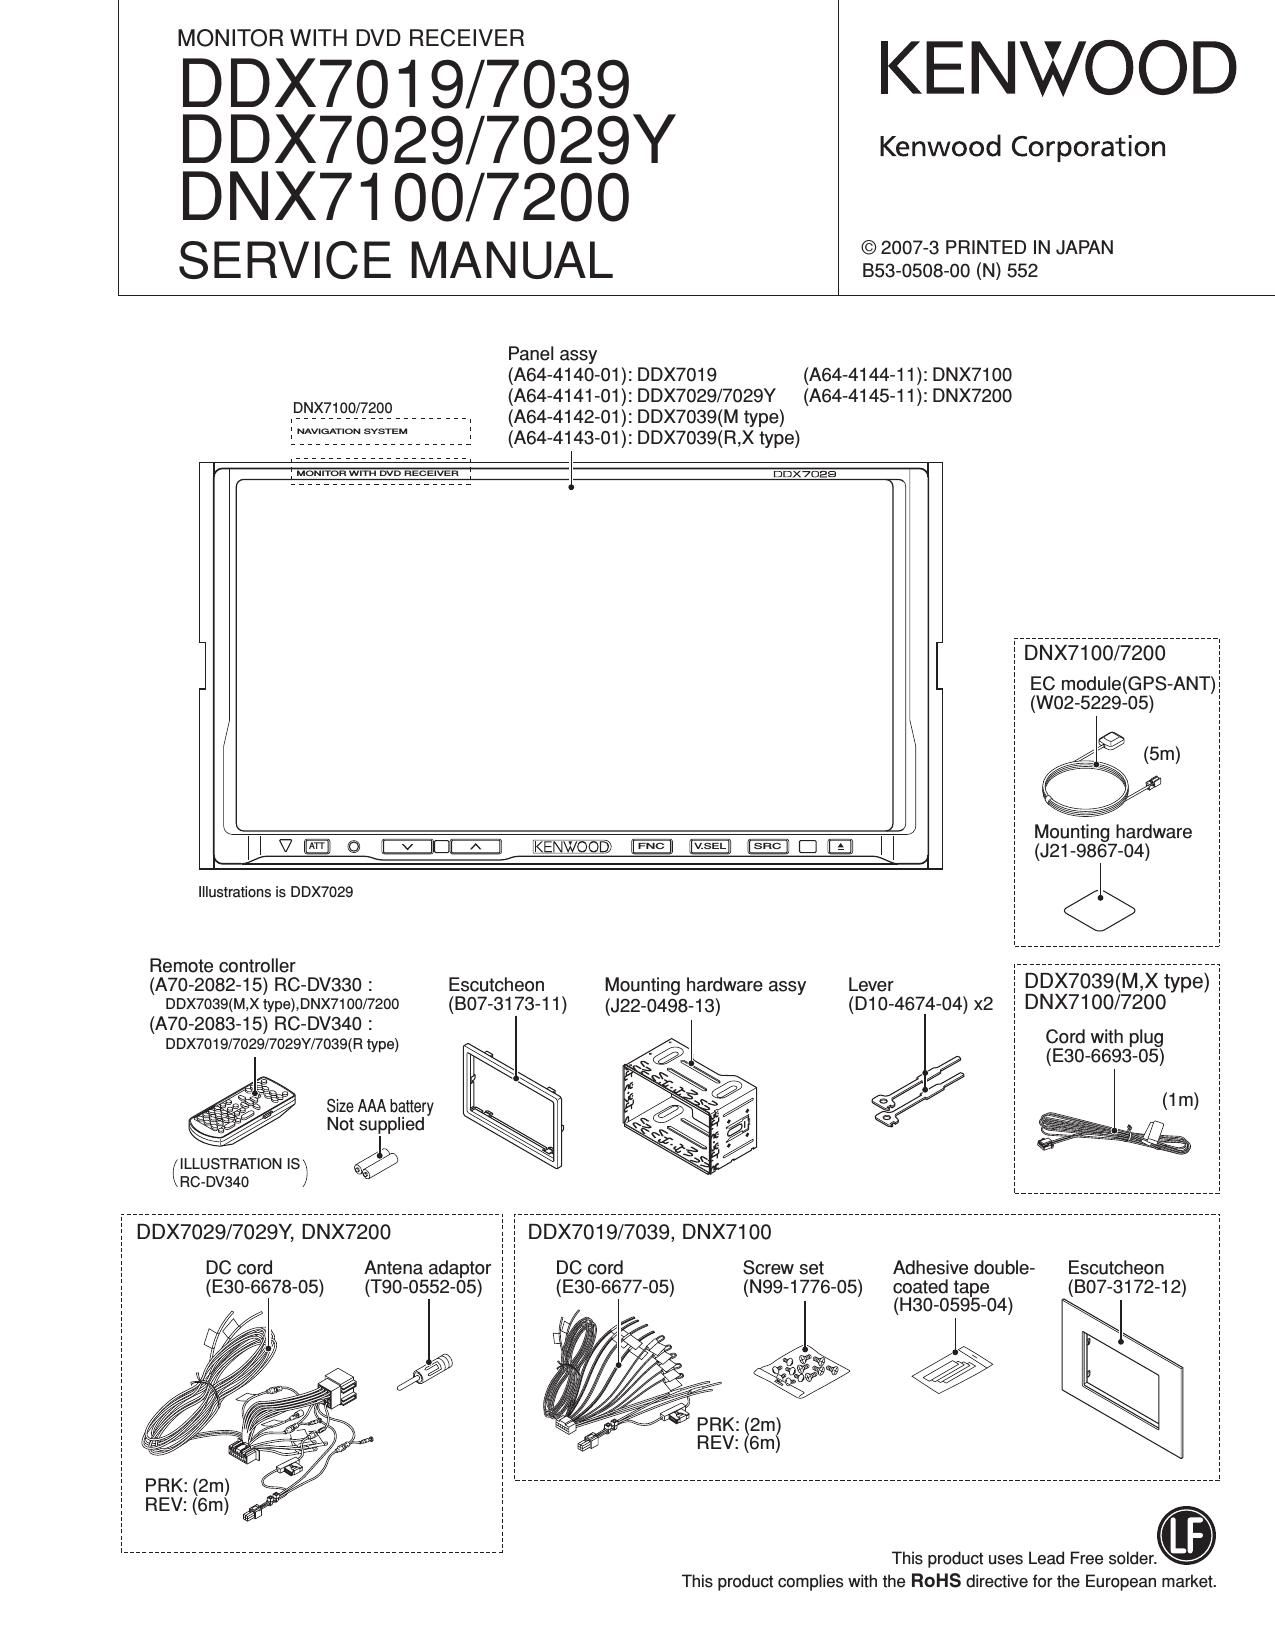 Kenwood DNX 7100 Service Manual